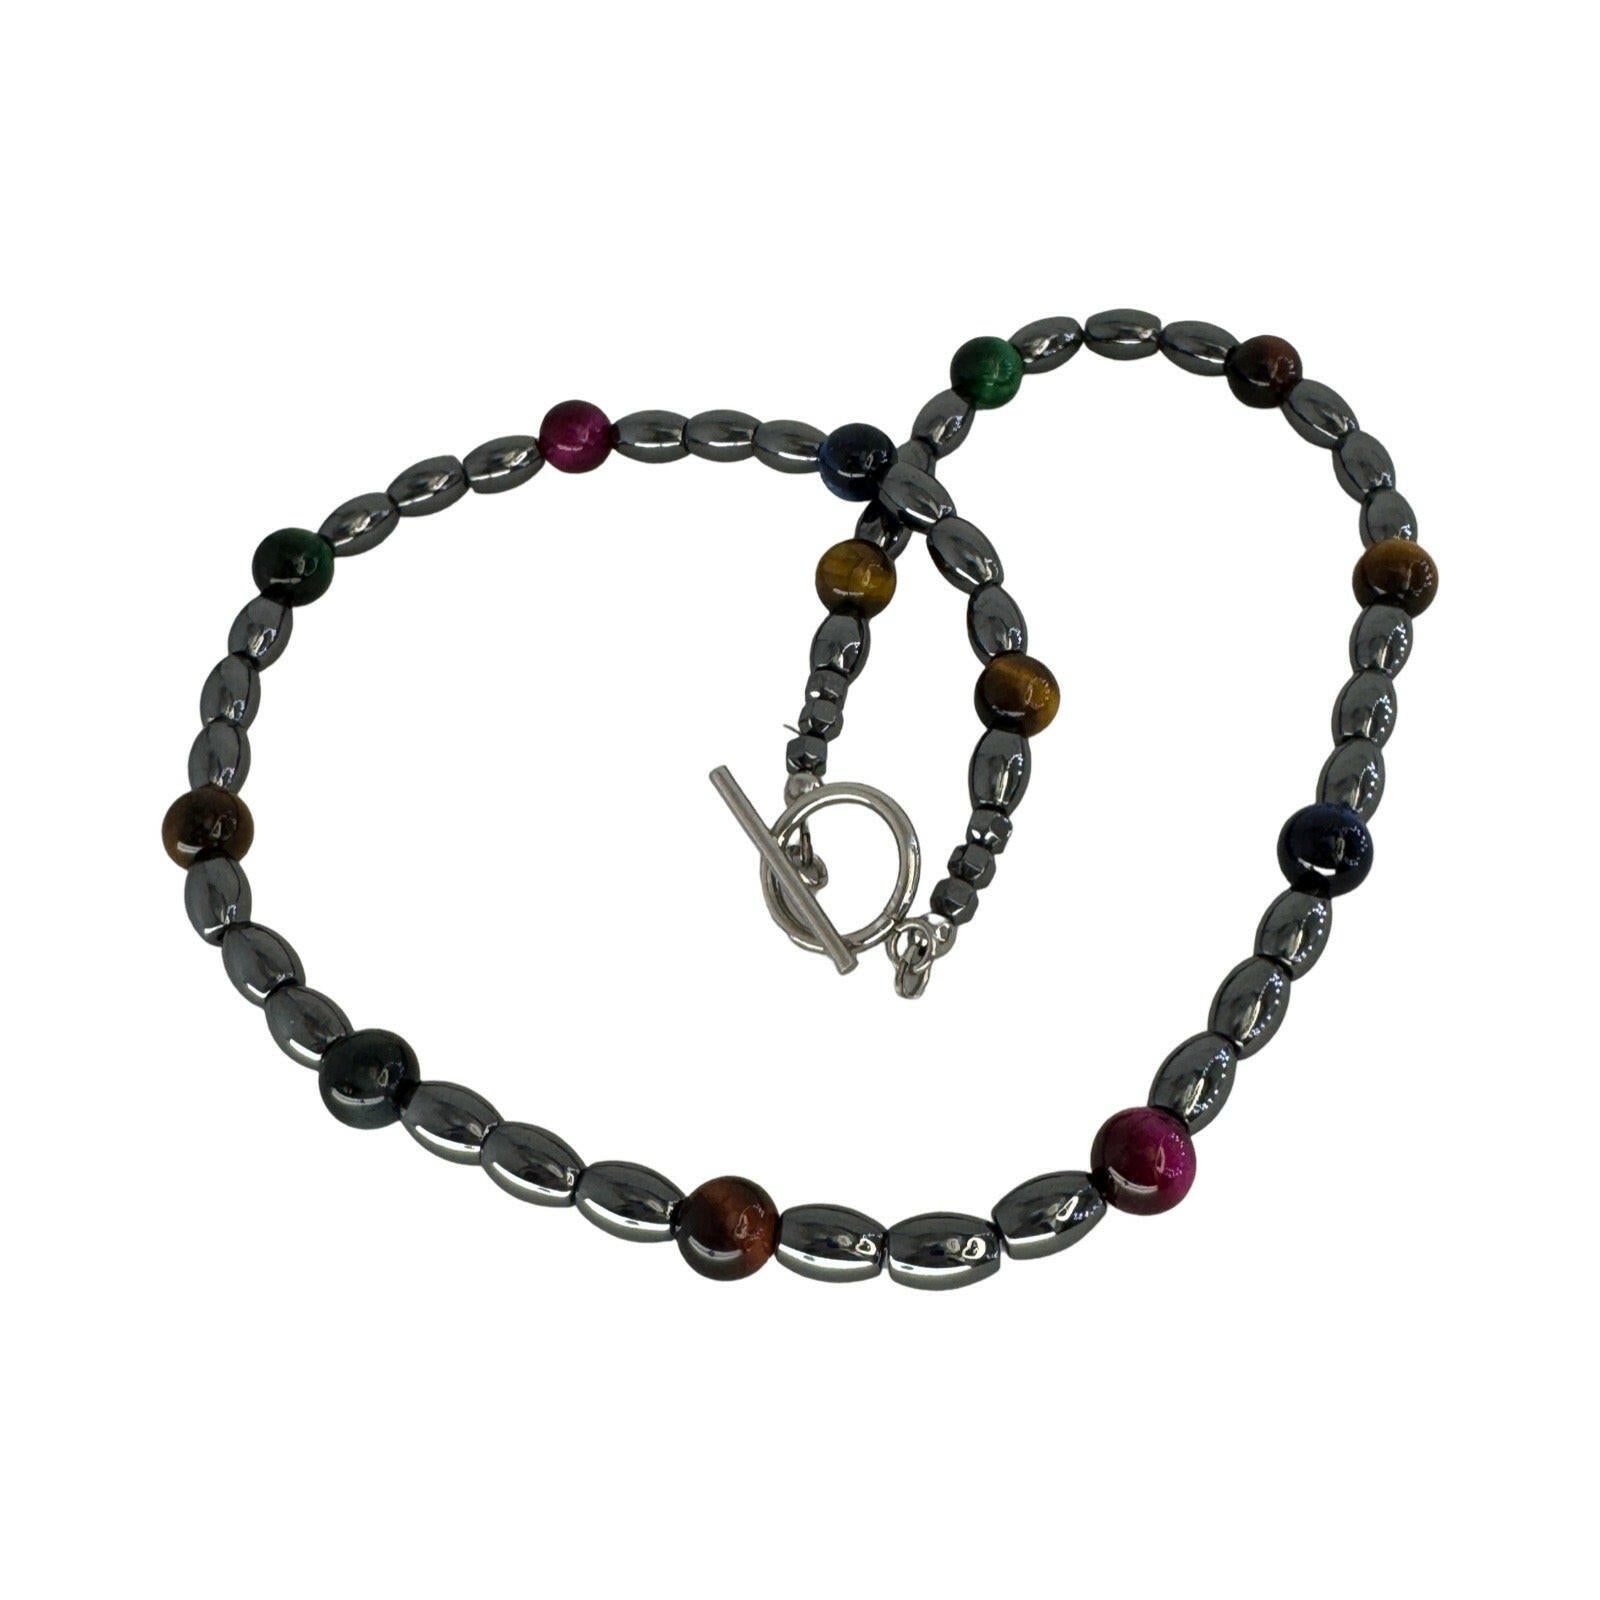 Handmade Hematite Men’s Necklace with Tiger Eye Beads.